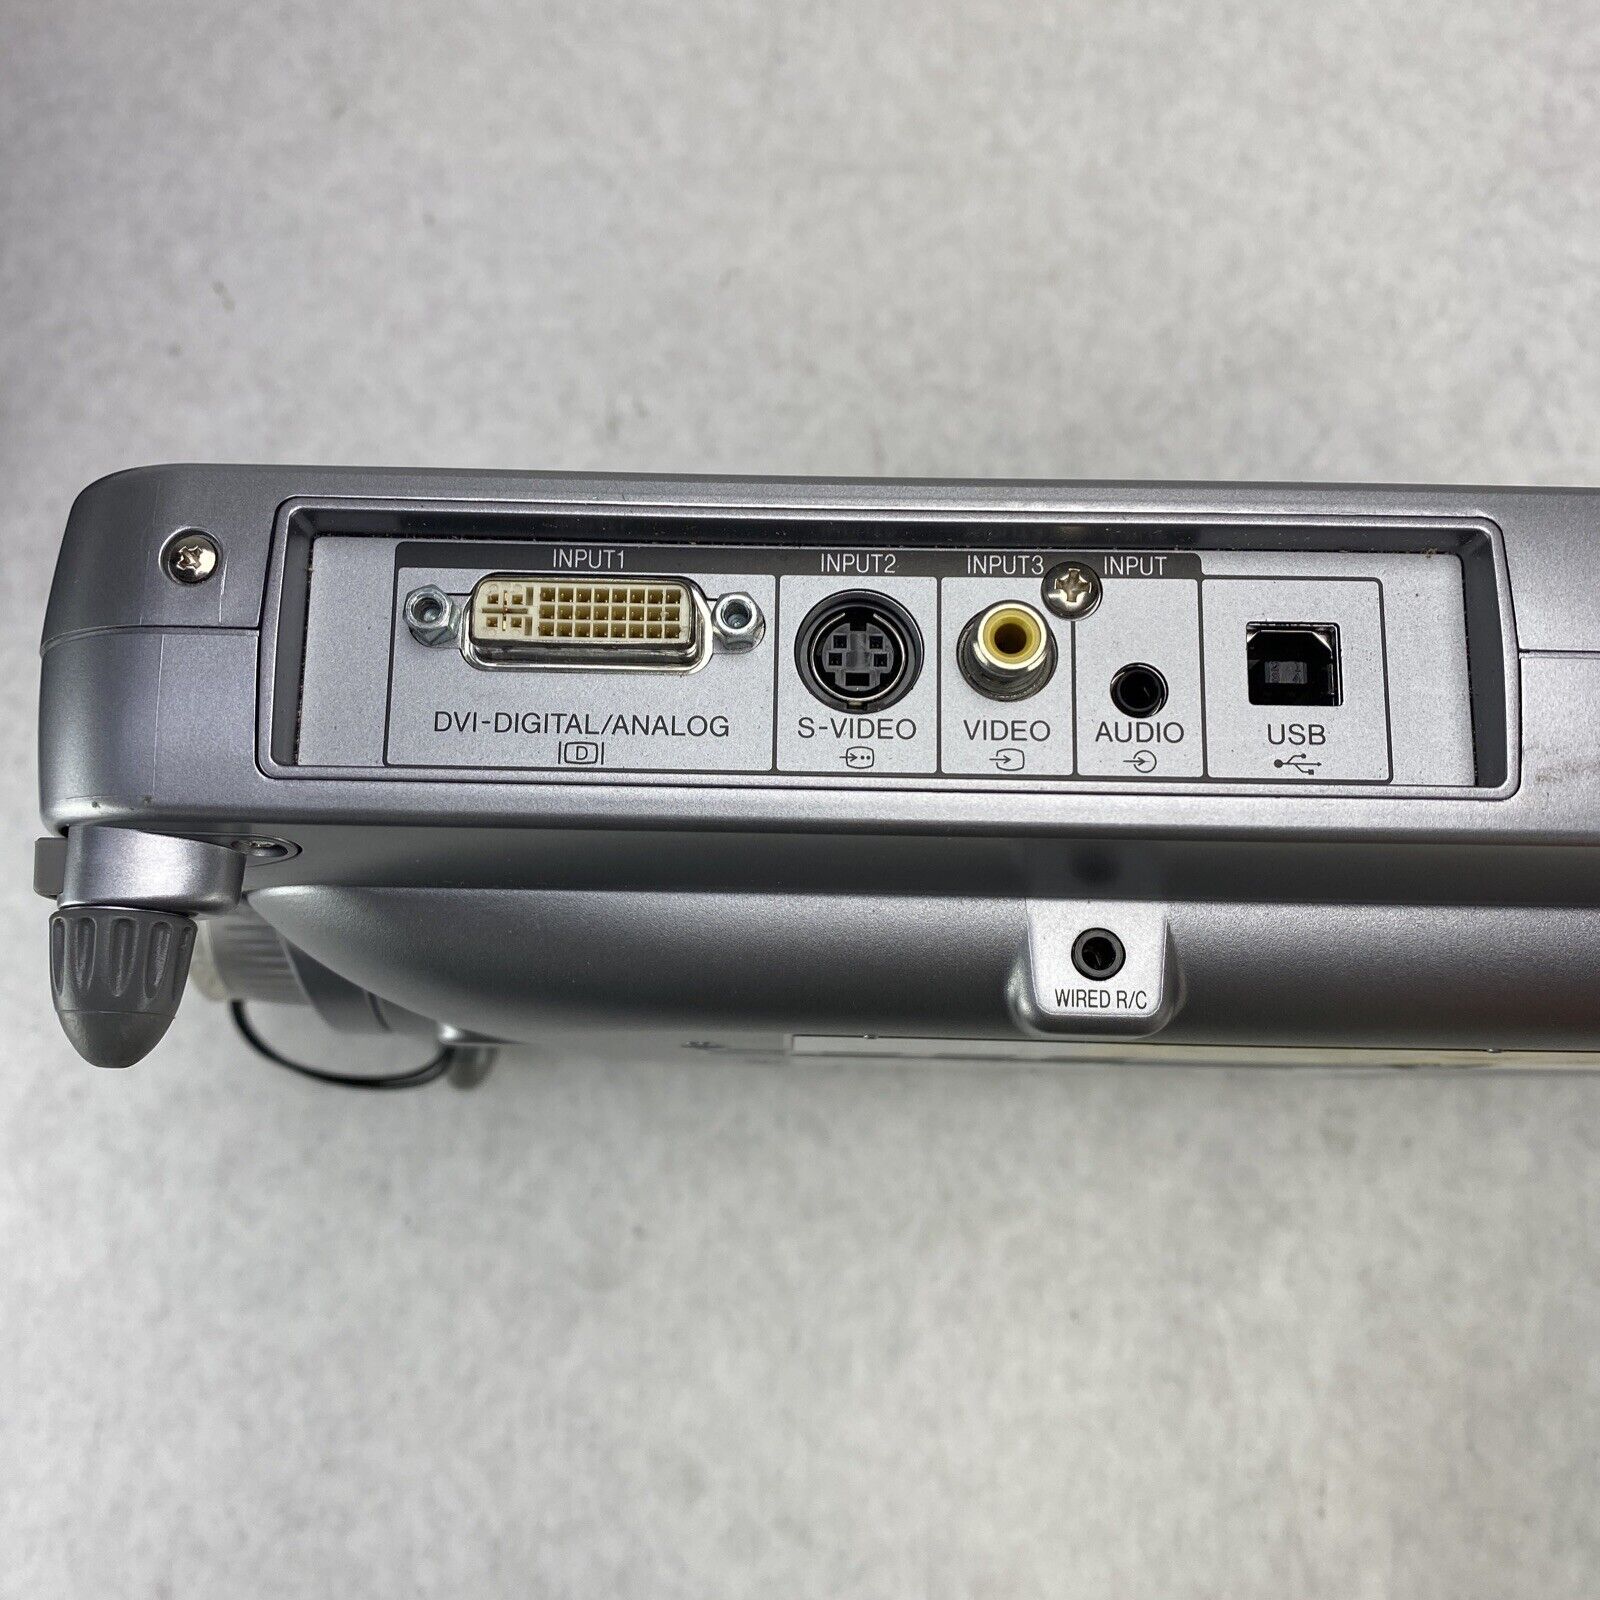 Sharp PG-M25X Notevision DLP Portable XGA Projector 1900 Lumens NO REMOTE